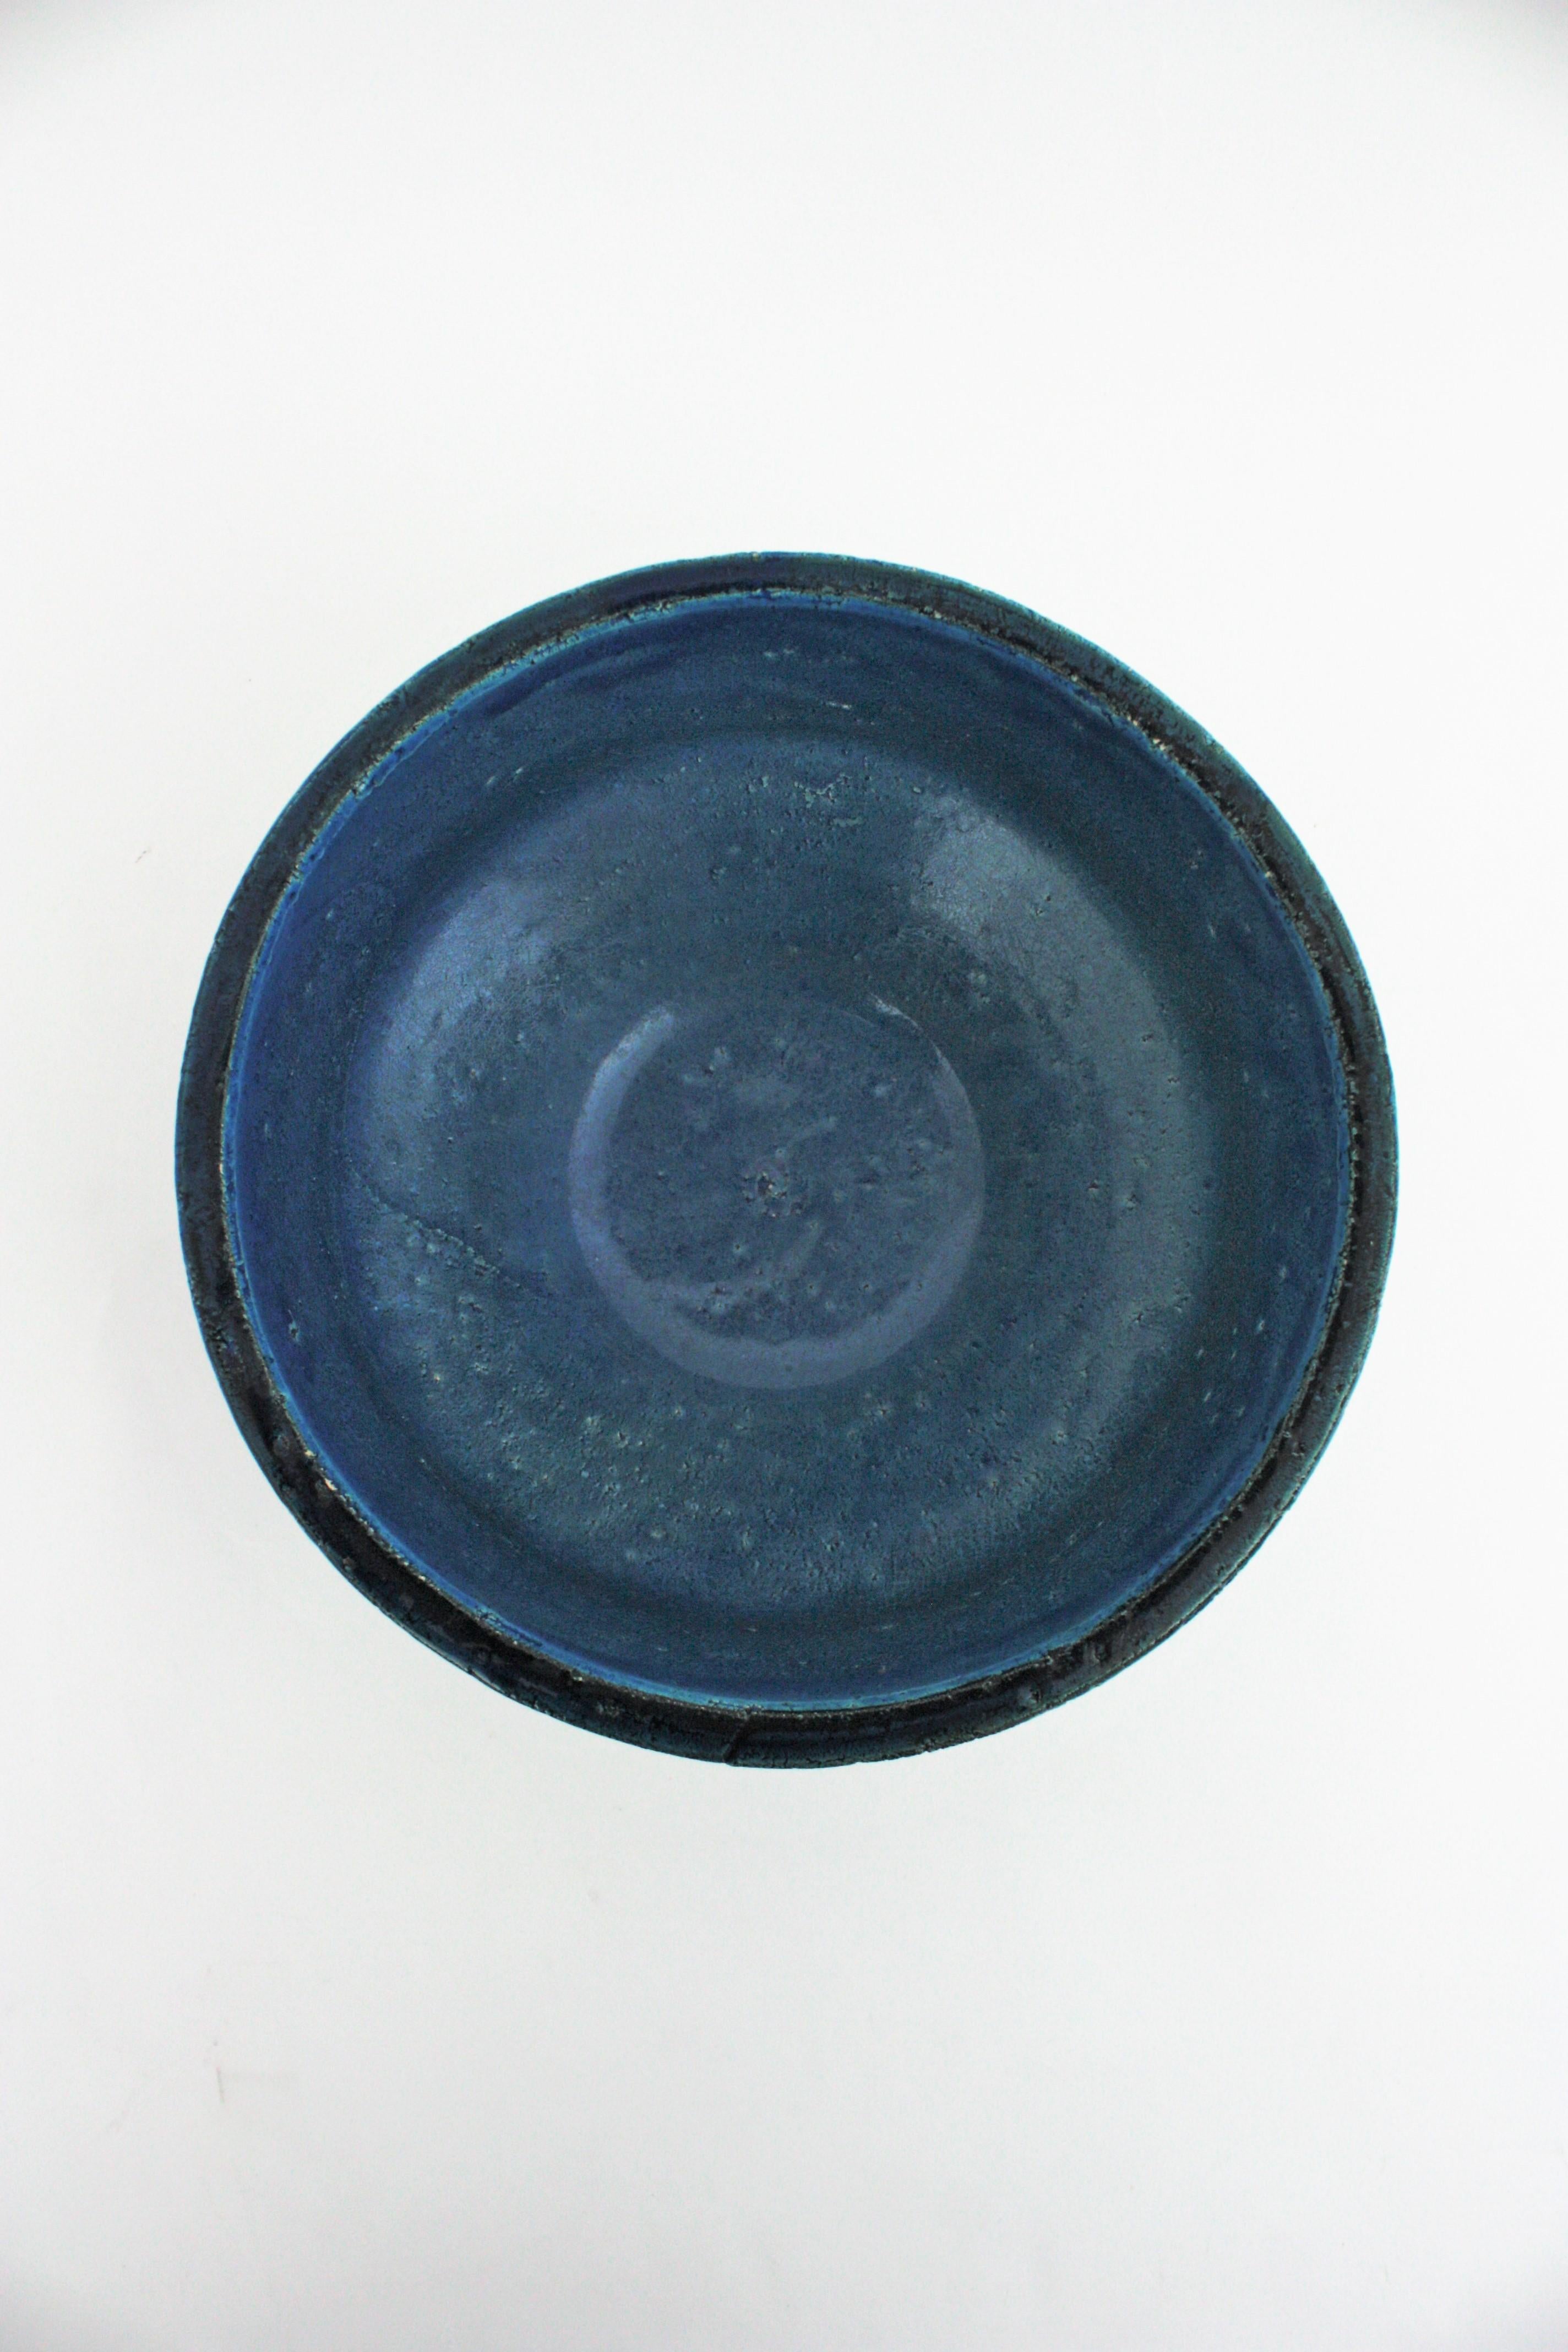 Aldo Londi Bitossi Rimini Blu Glazed Ceramic Centerpiece Bowl, 1950s For Sale 2